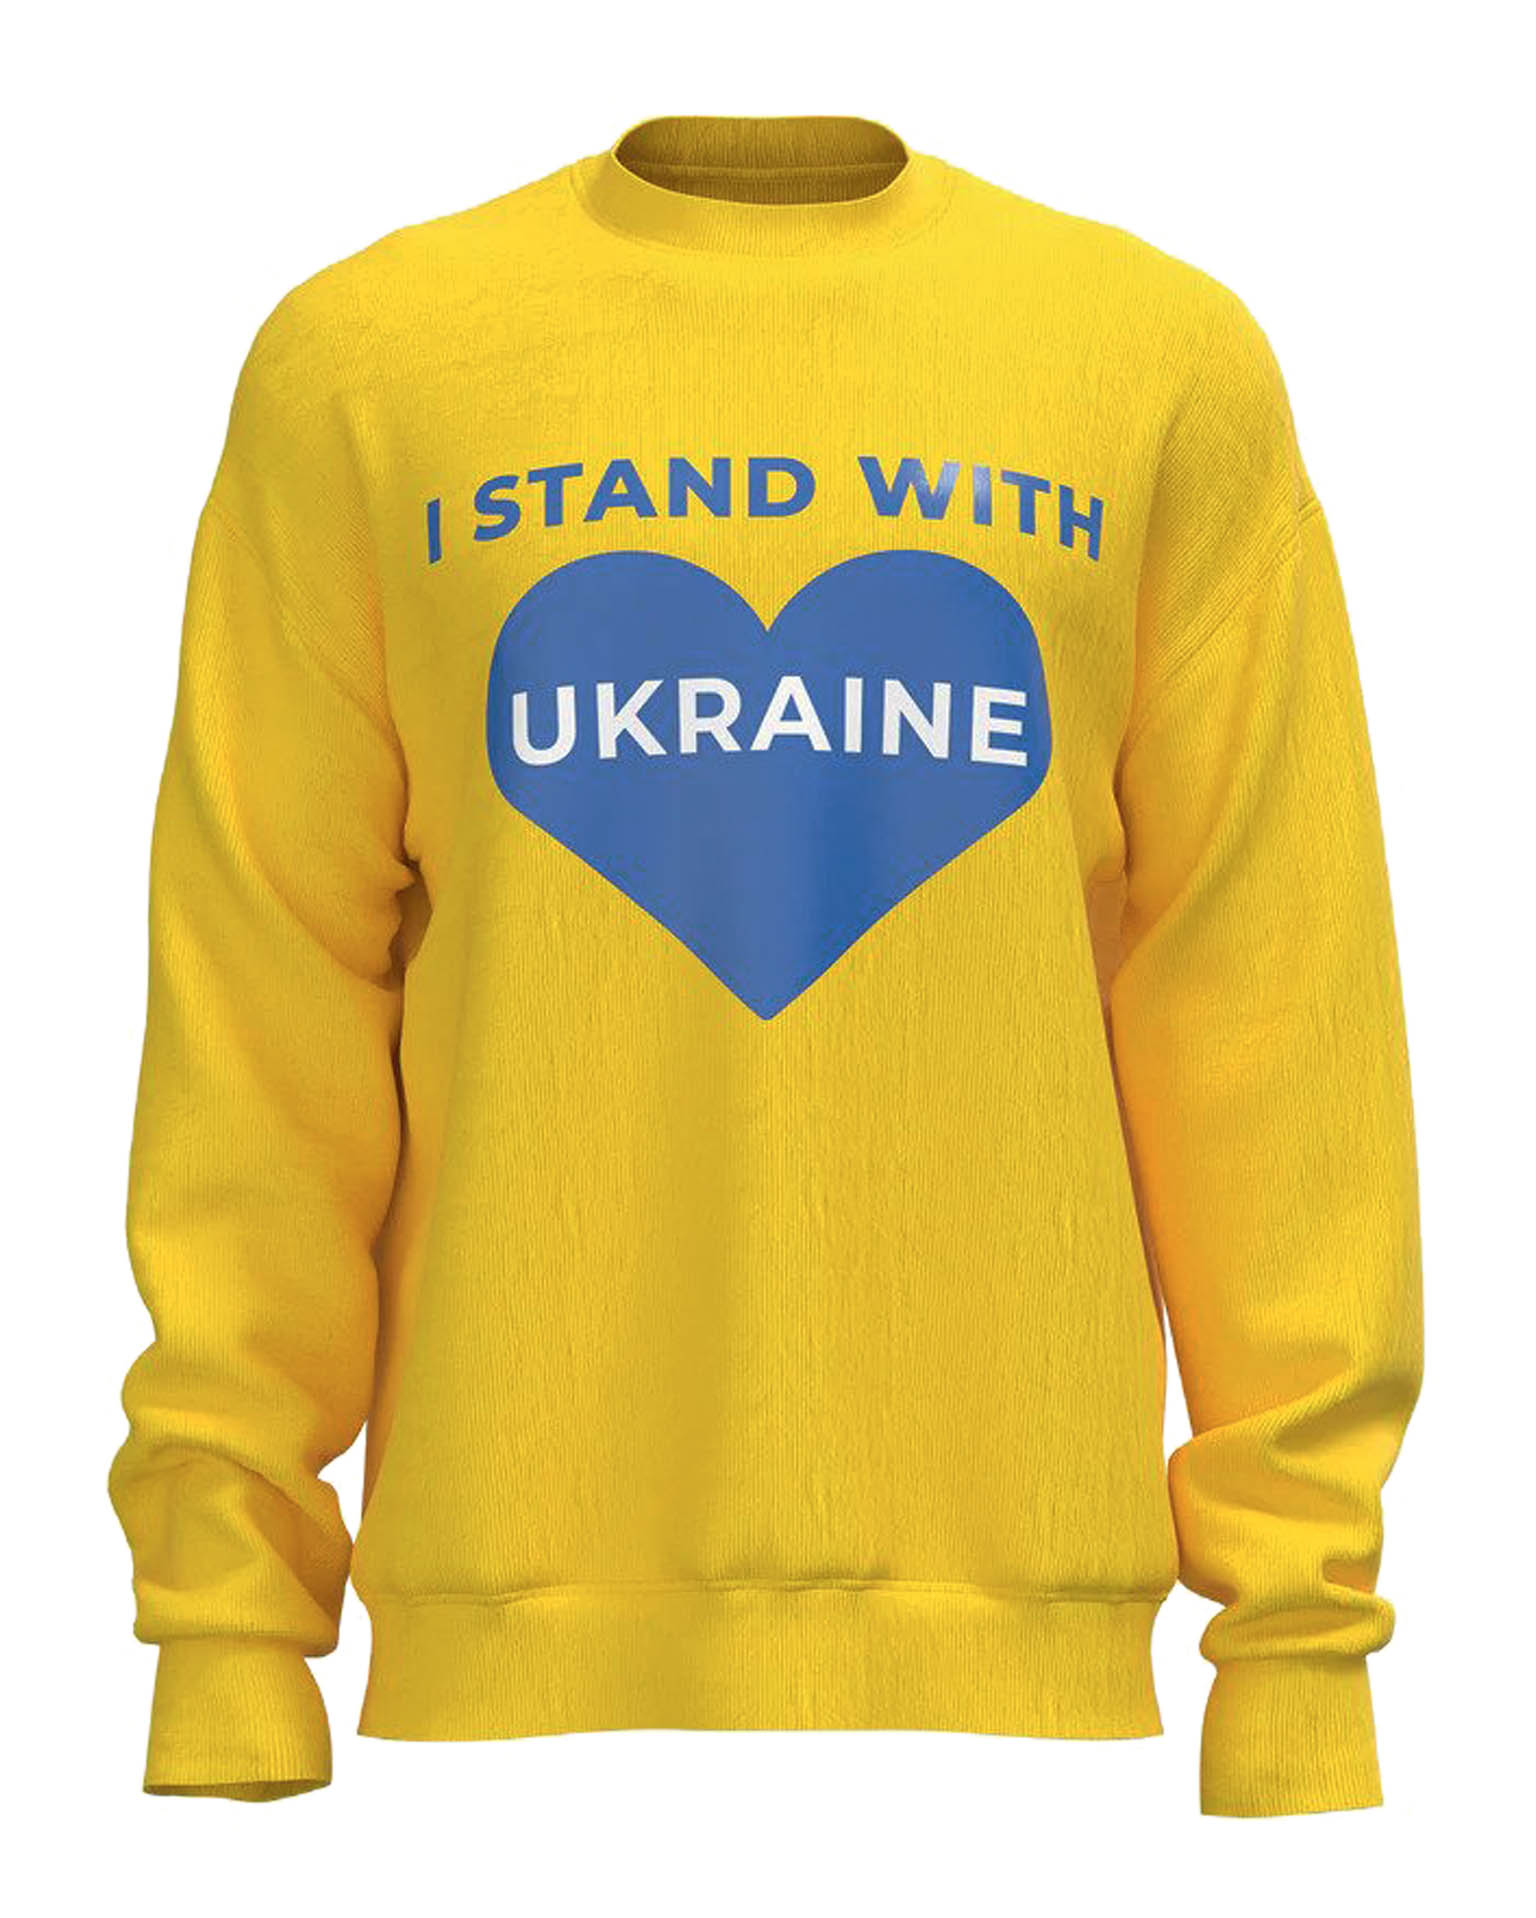 Kolekce na podporu Ukrajiny